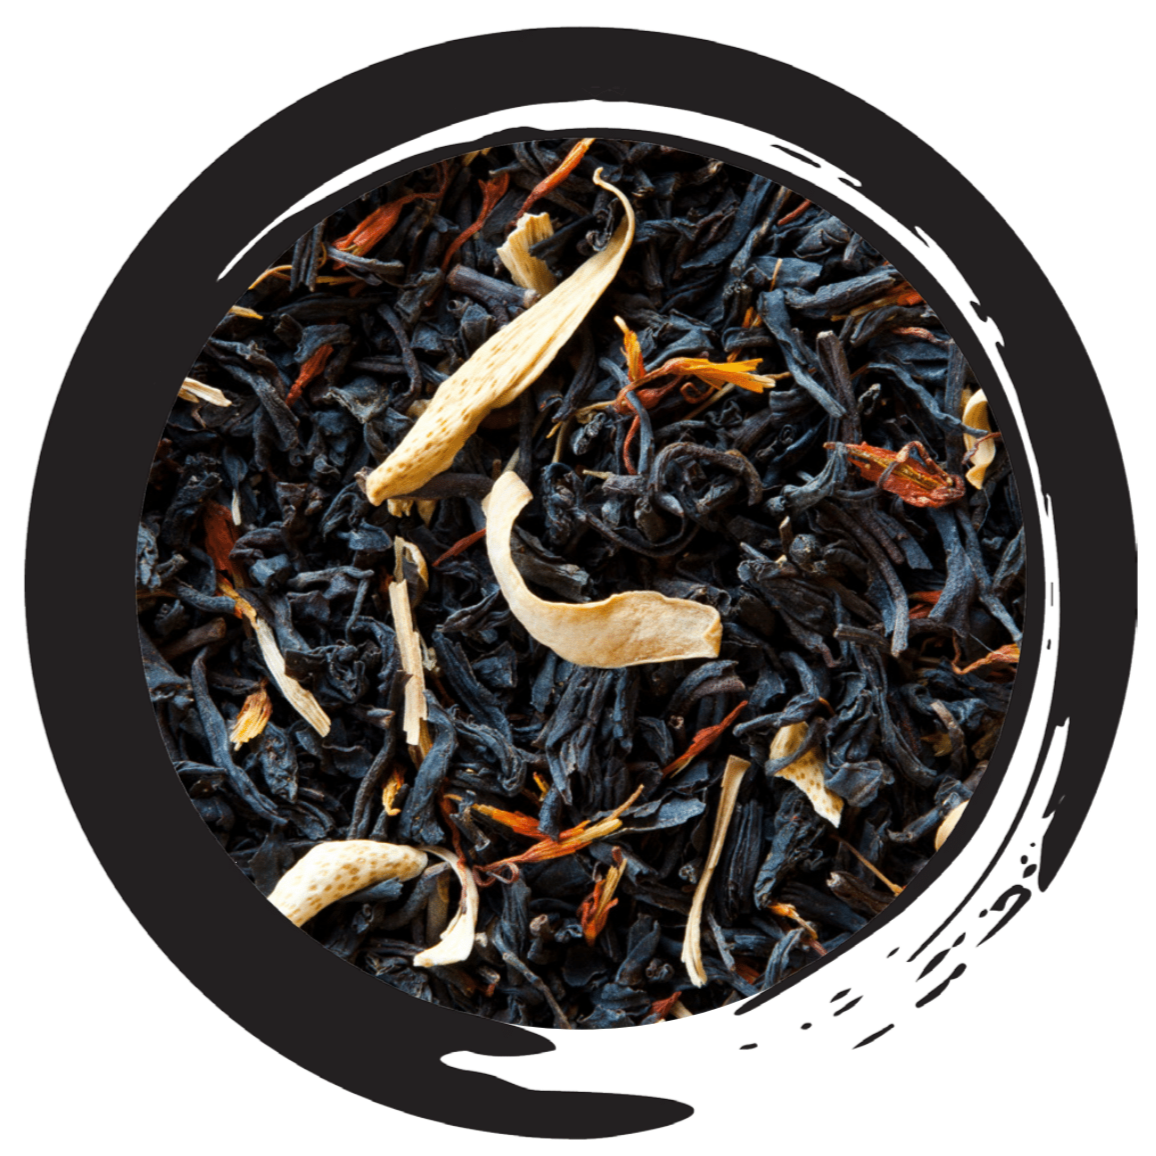 Special Blend Tea - Loose, Black Teas